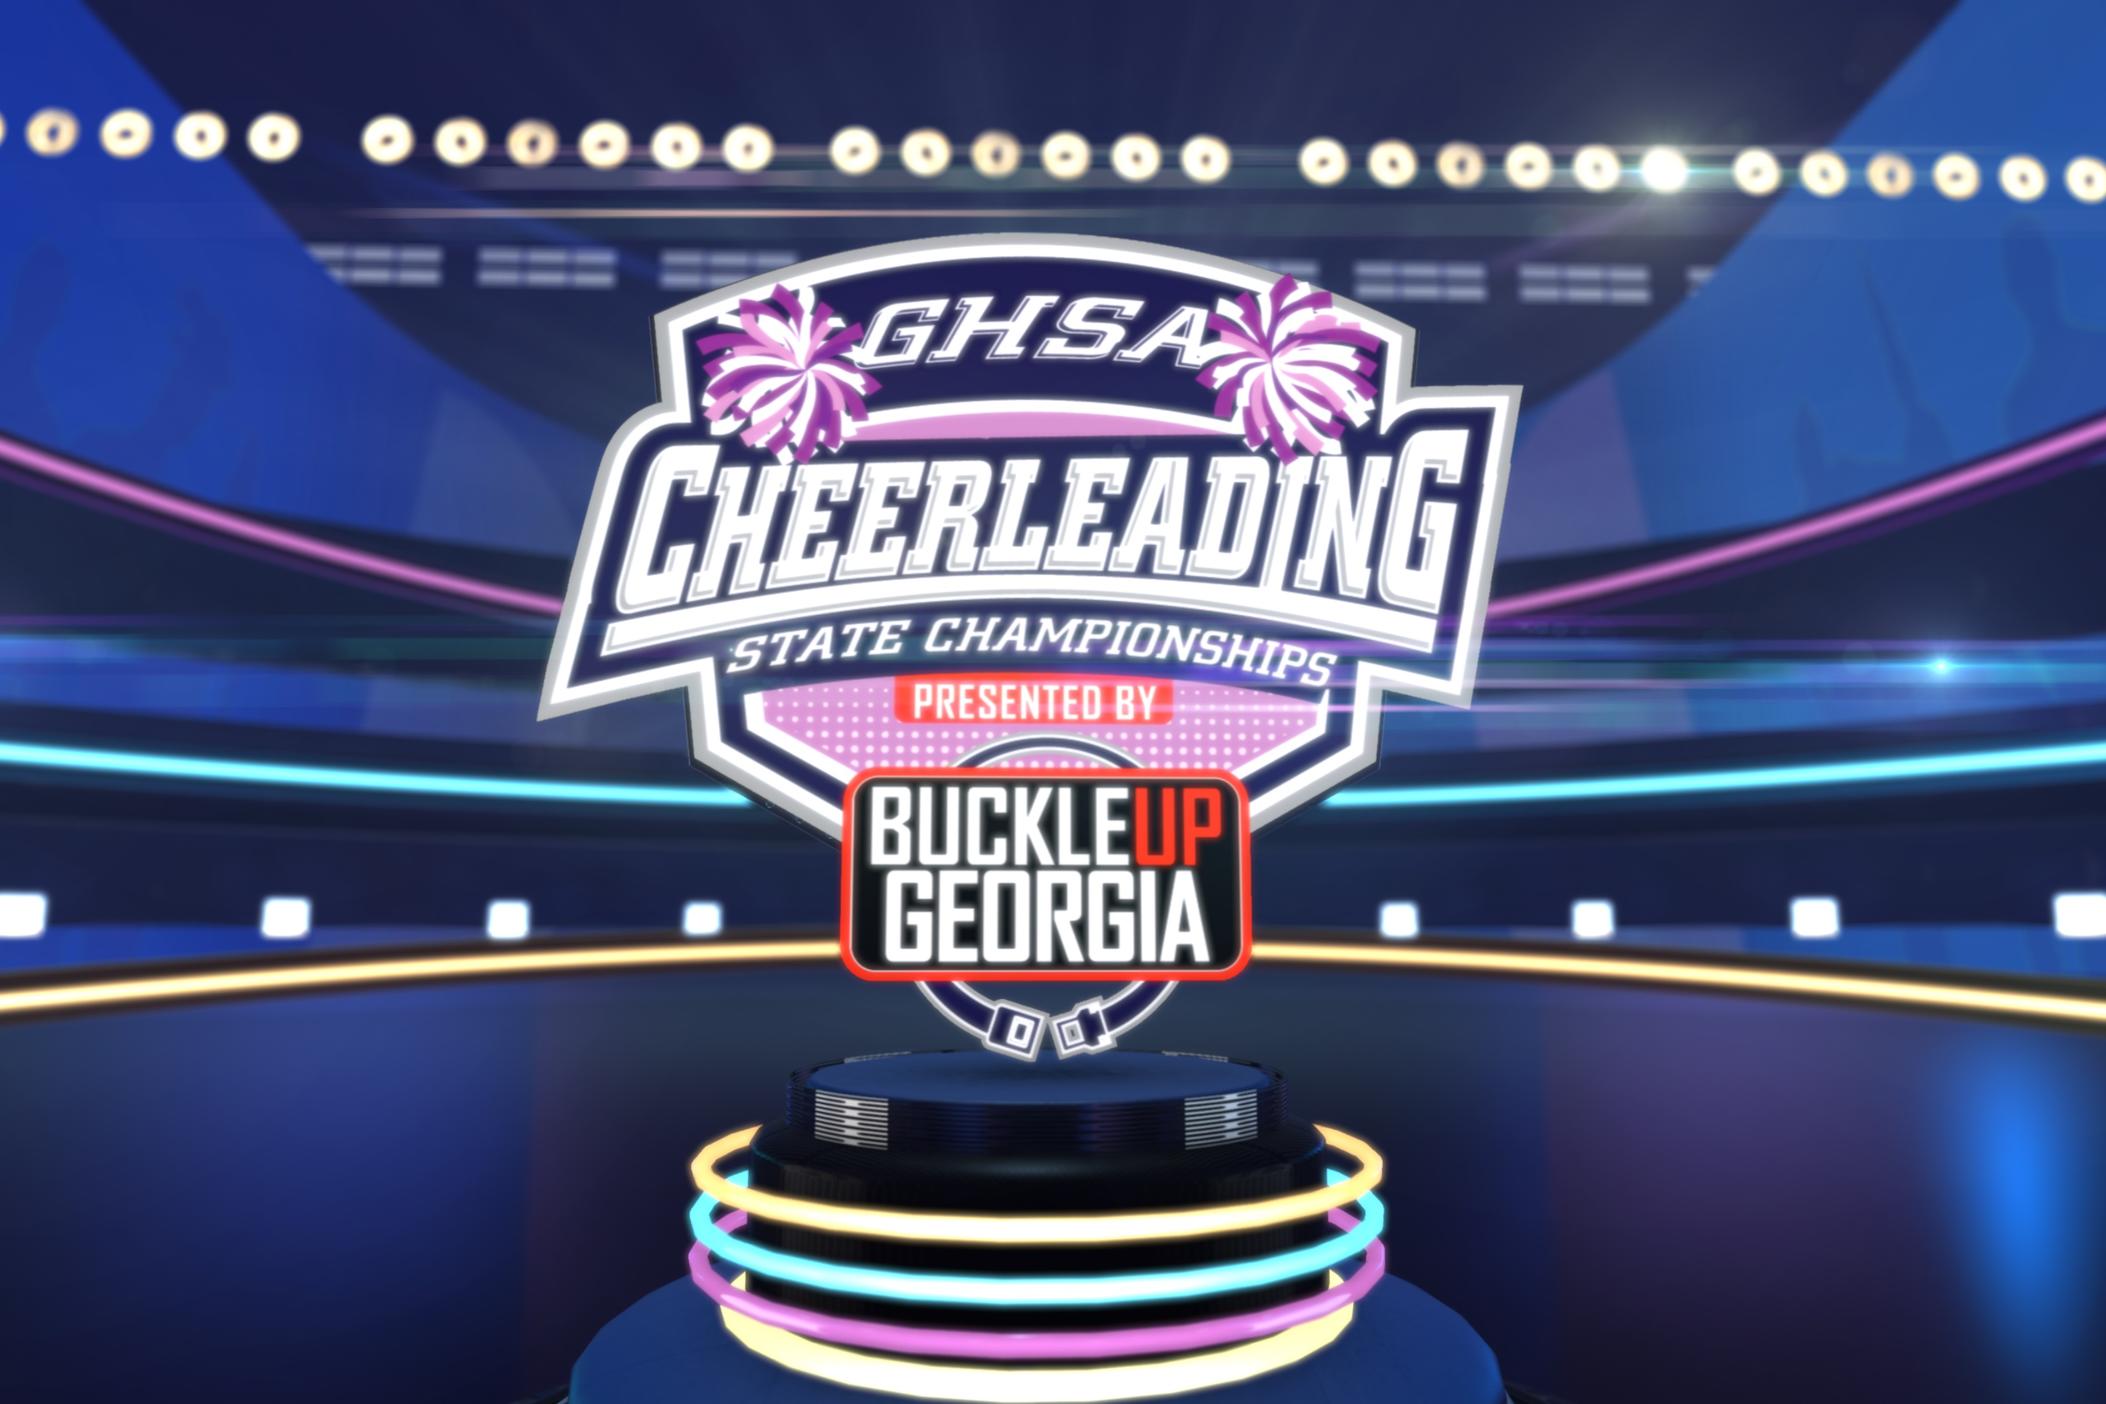 2020 GHSA Cheerleading Championship 